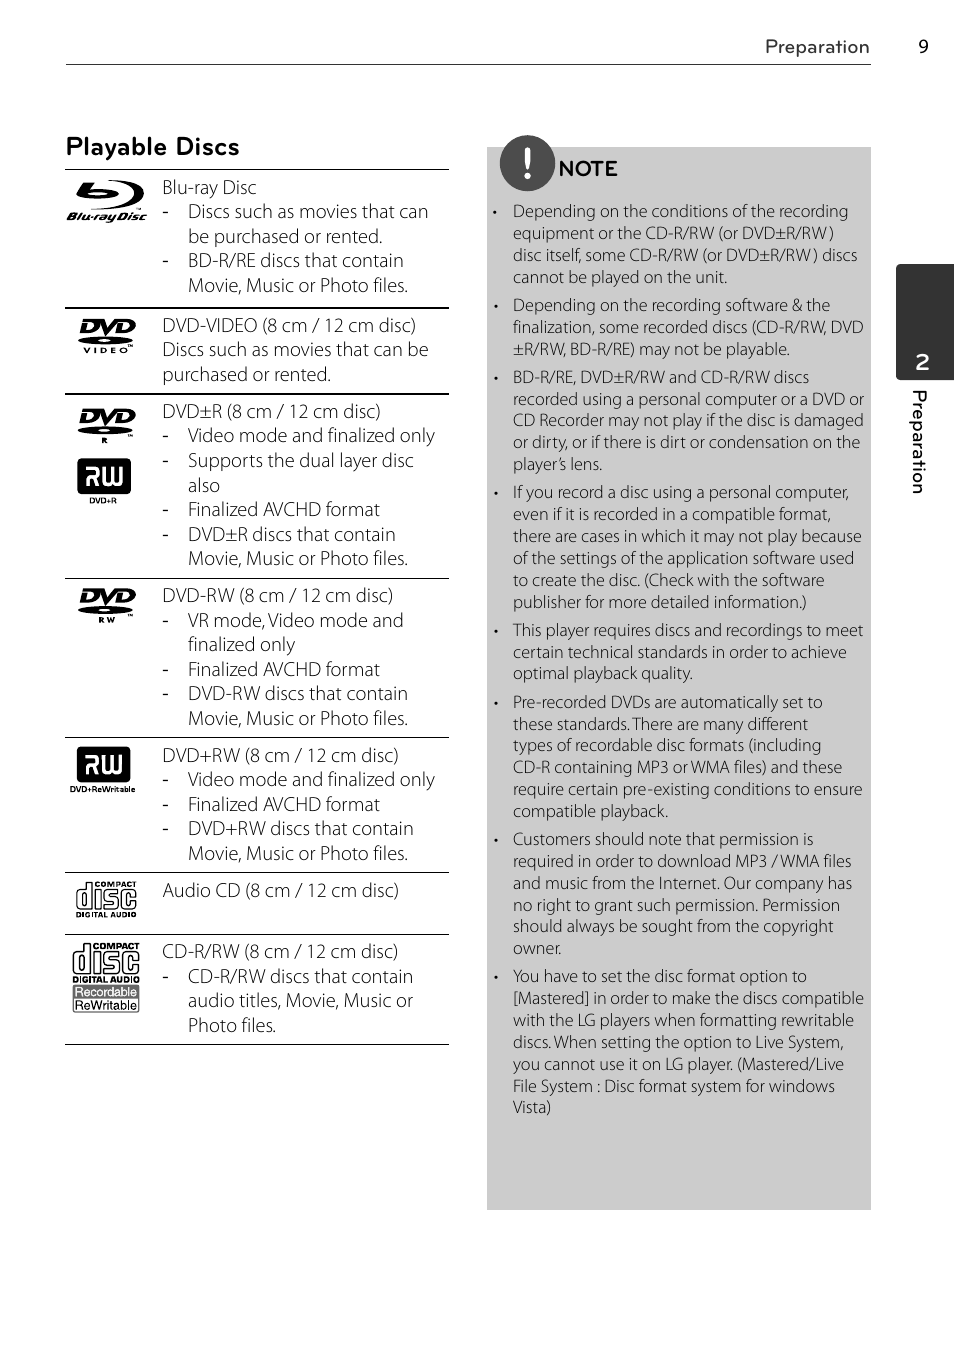 Playable discs | LG BD678N User Manual | Page 9 / 72